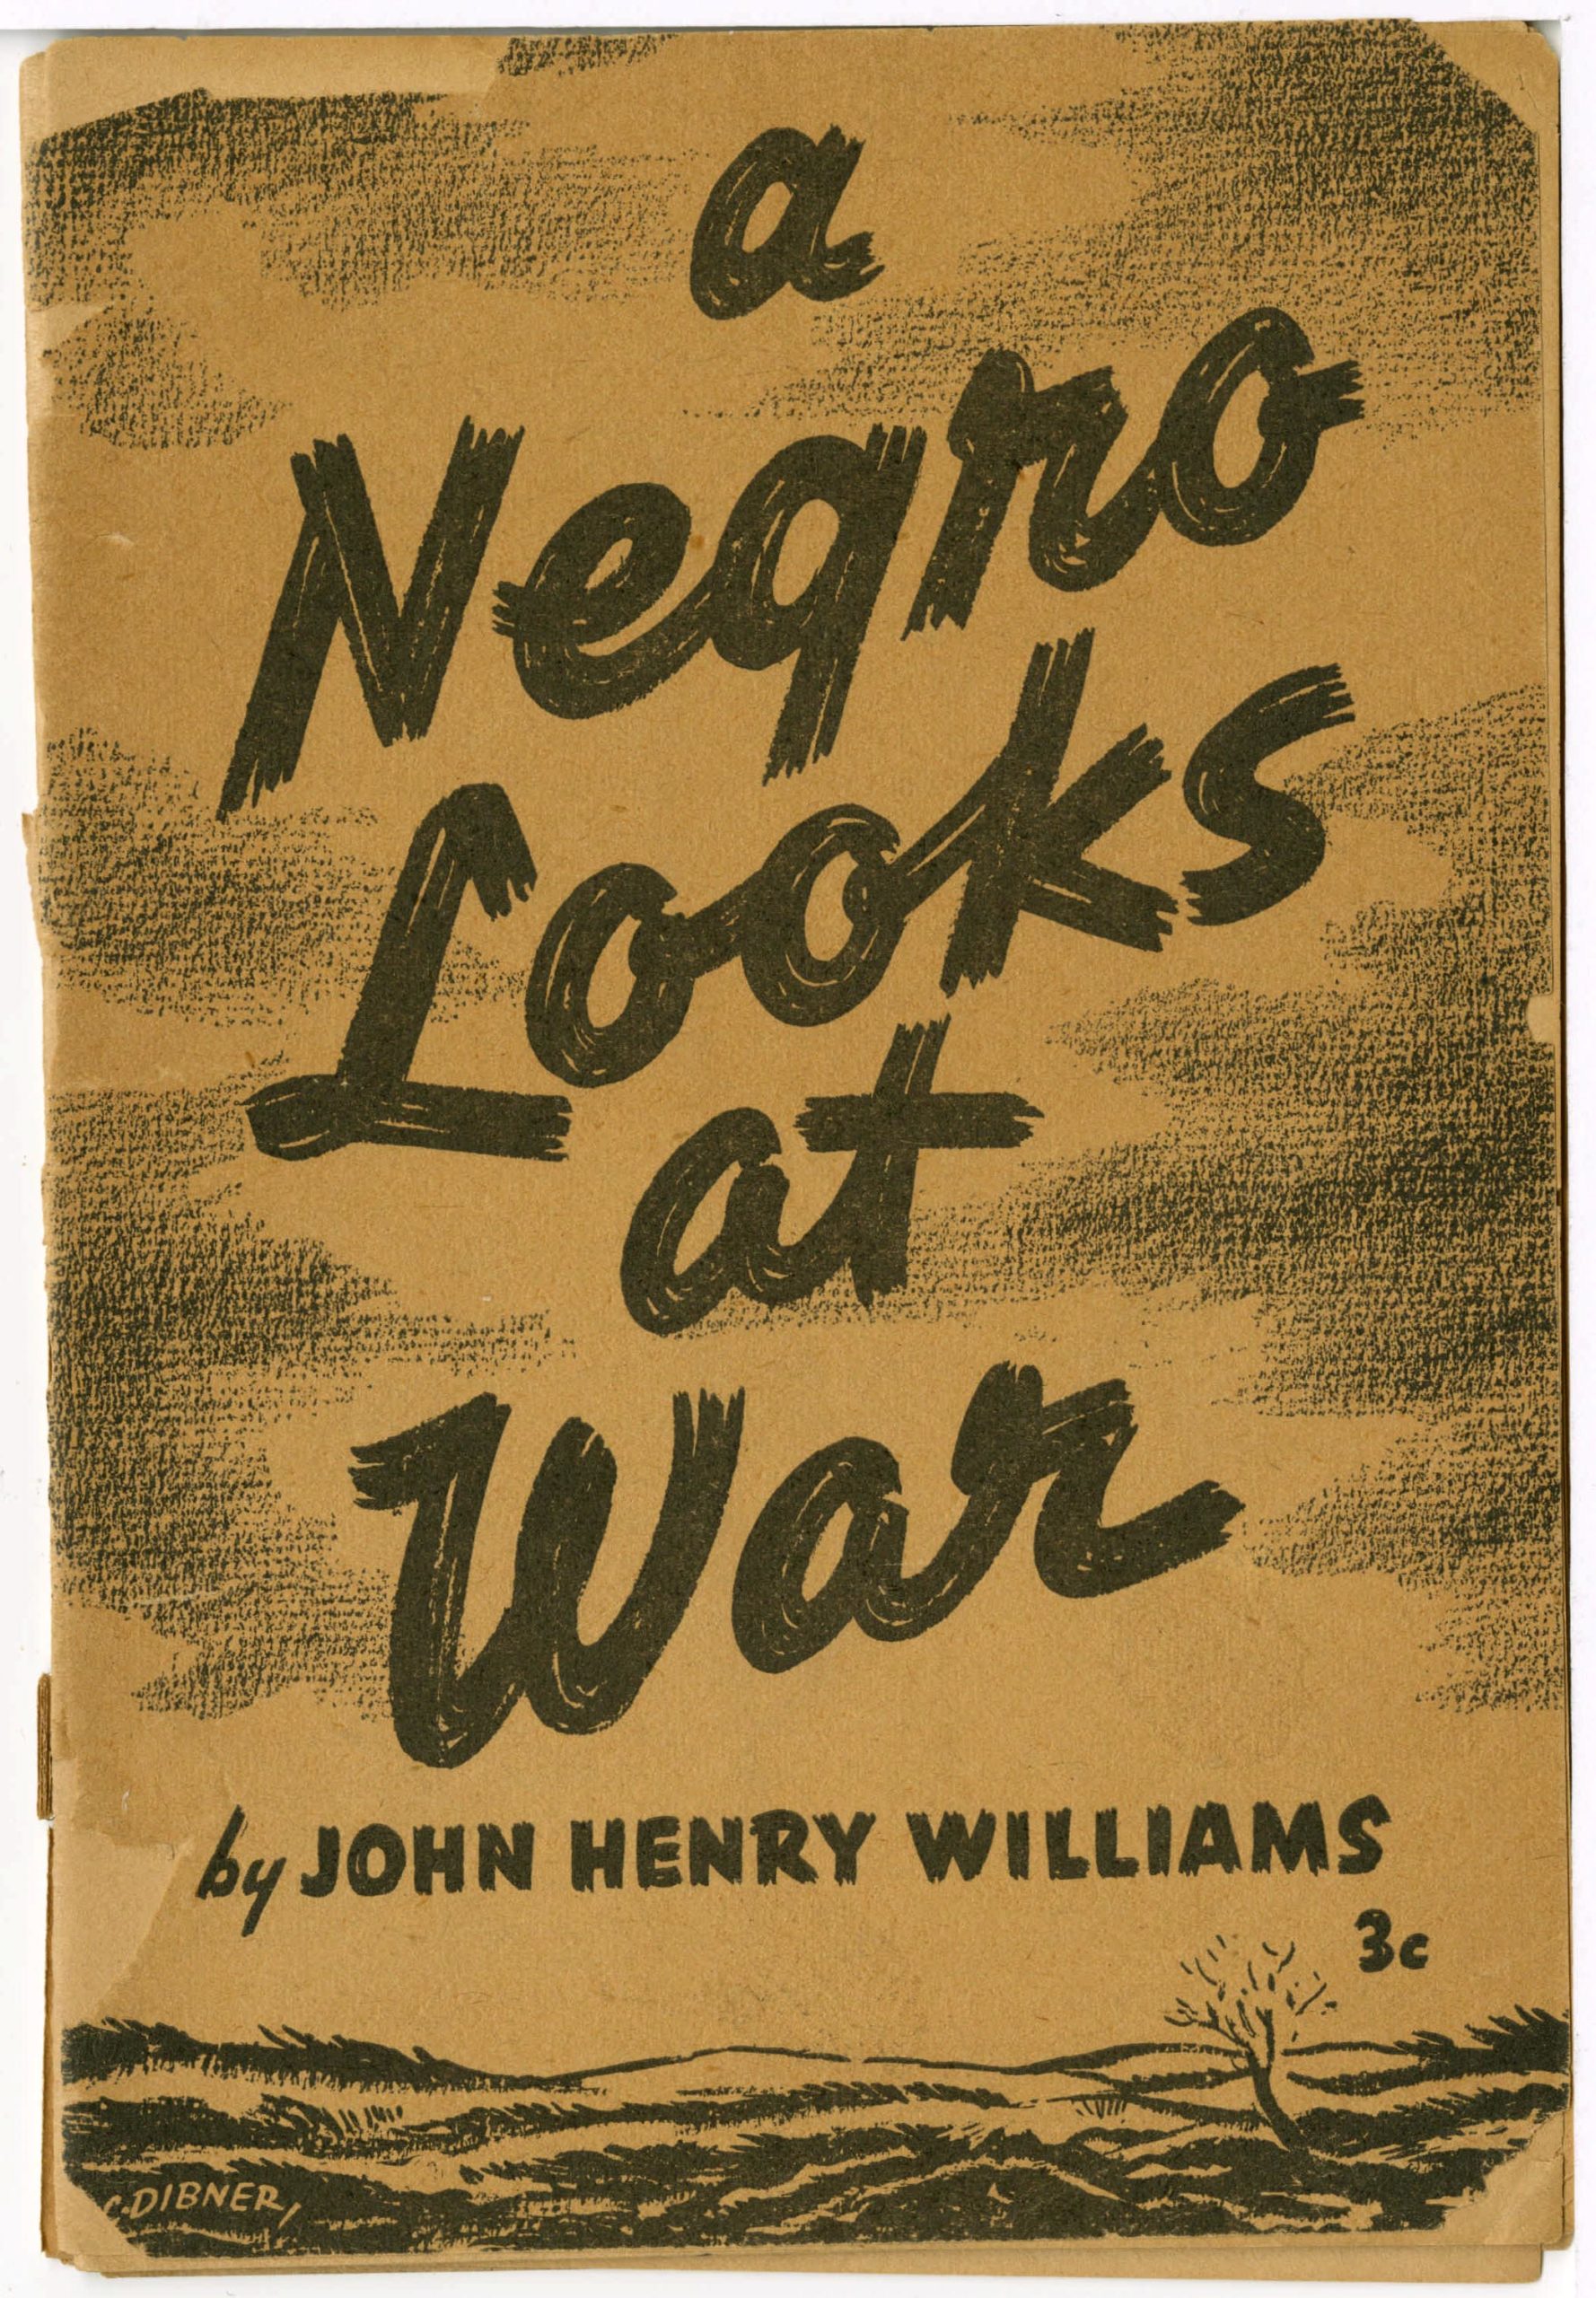 "A Negro Looks at War", John Henry Williams, 1940 January, World War II vertical file